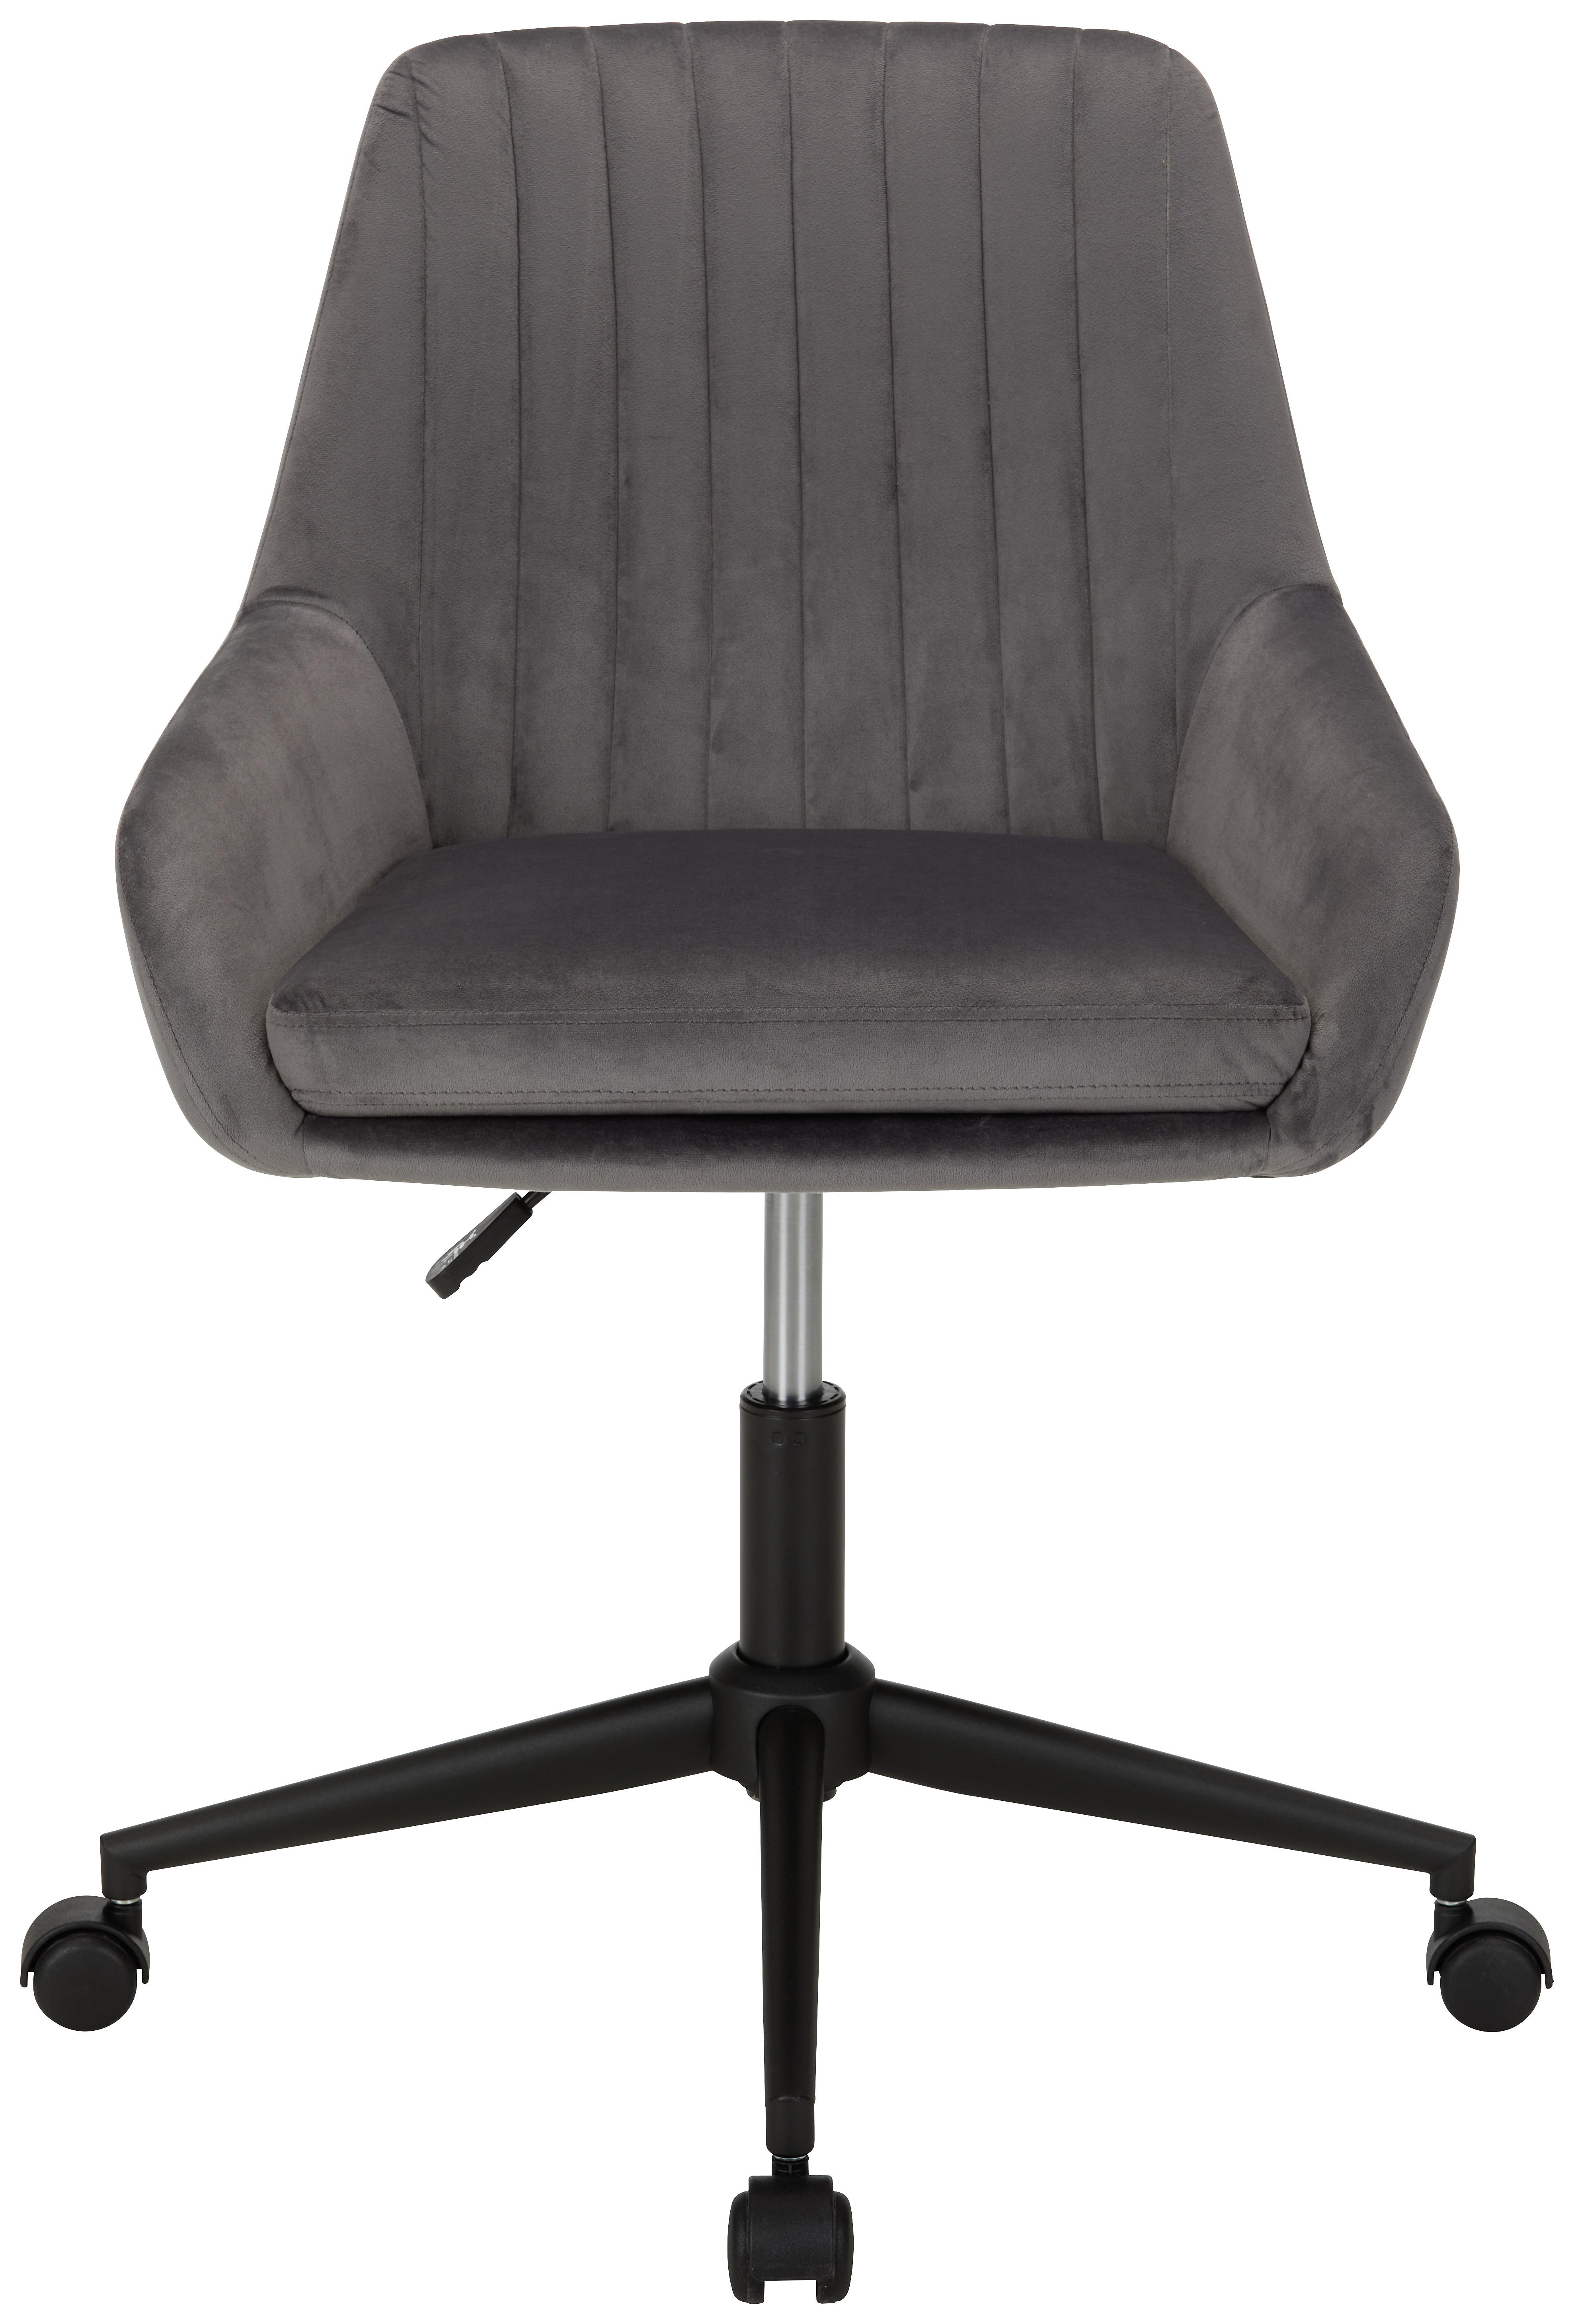 Vrtljivi Stol Chilly - siva/črna, Moderno, kovina/umetna masa (60/82,5-92/60cm) - Modern Living